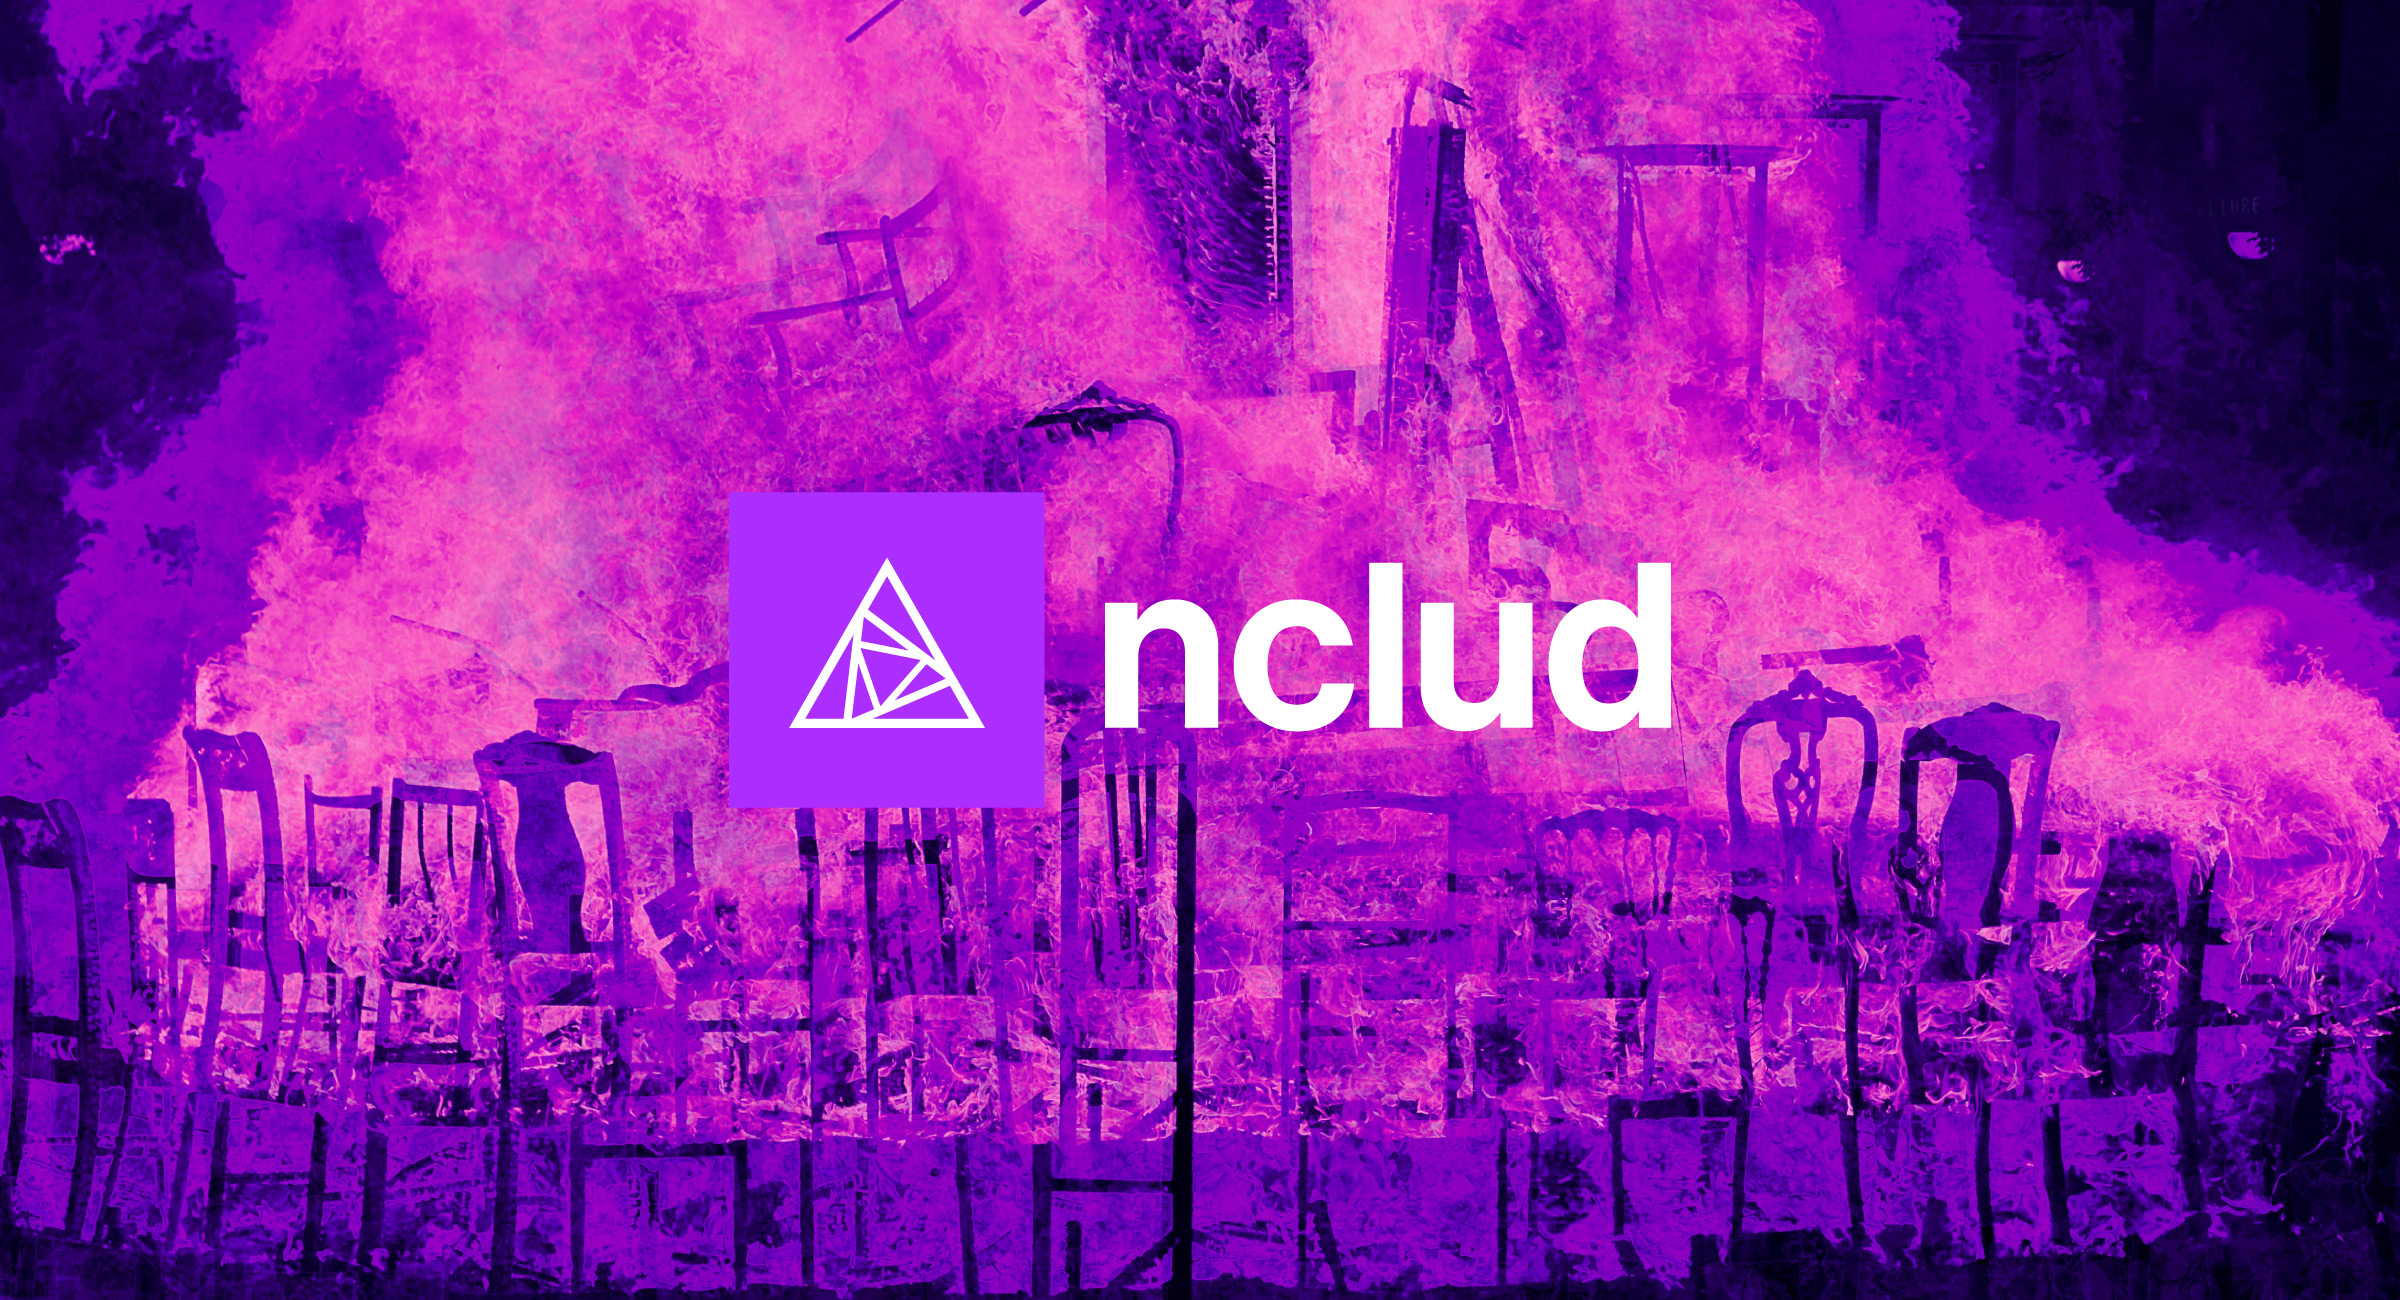 nclud Rebrand: A Provocative Creative Agency